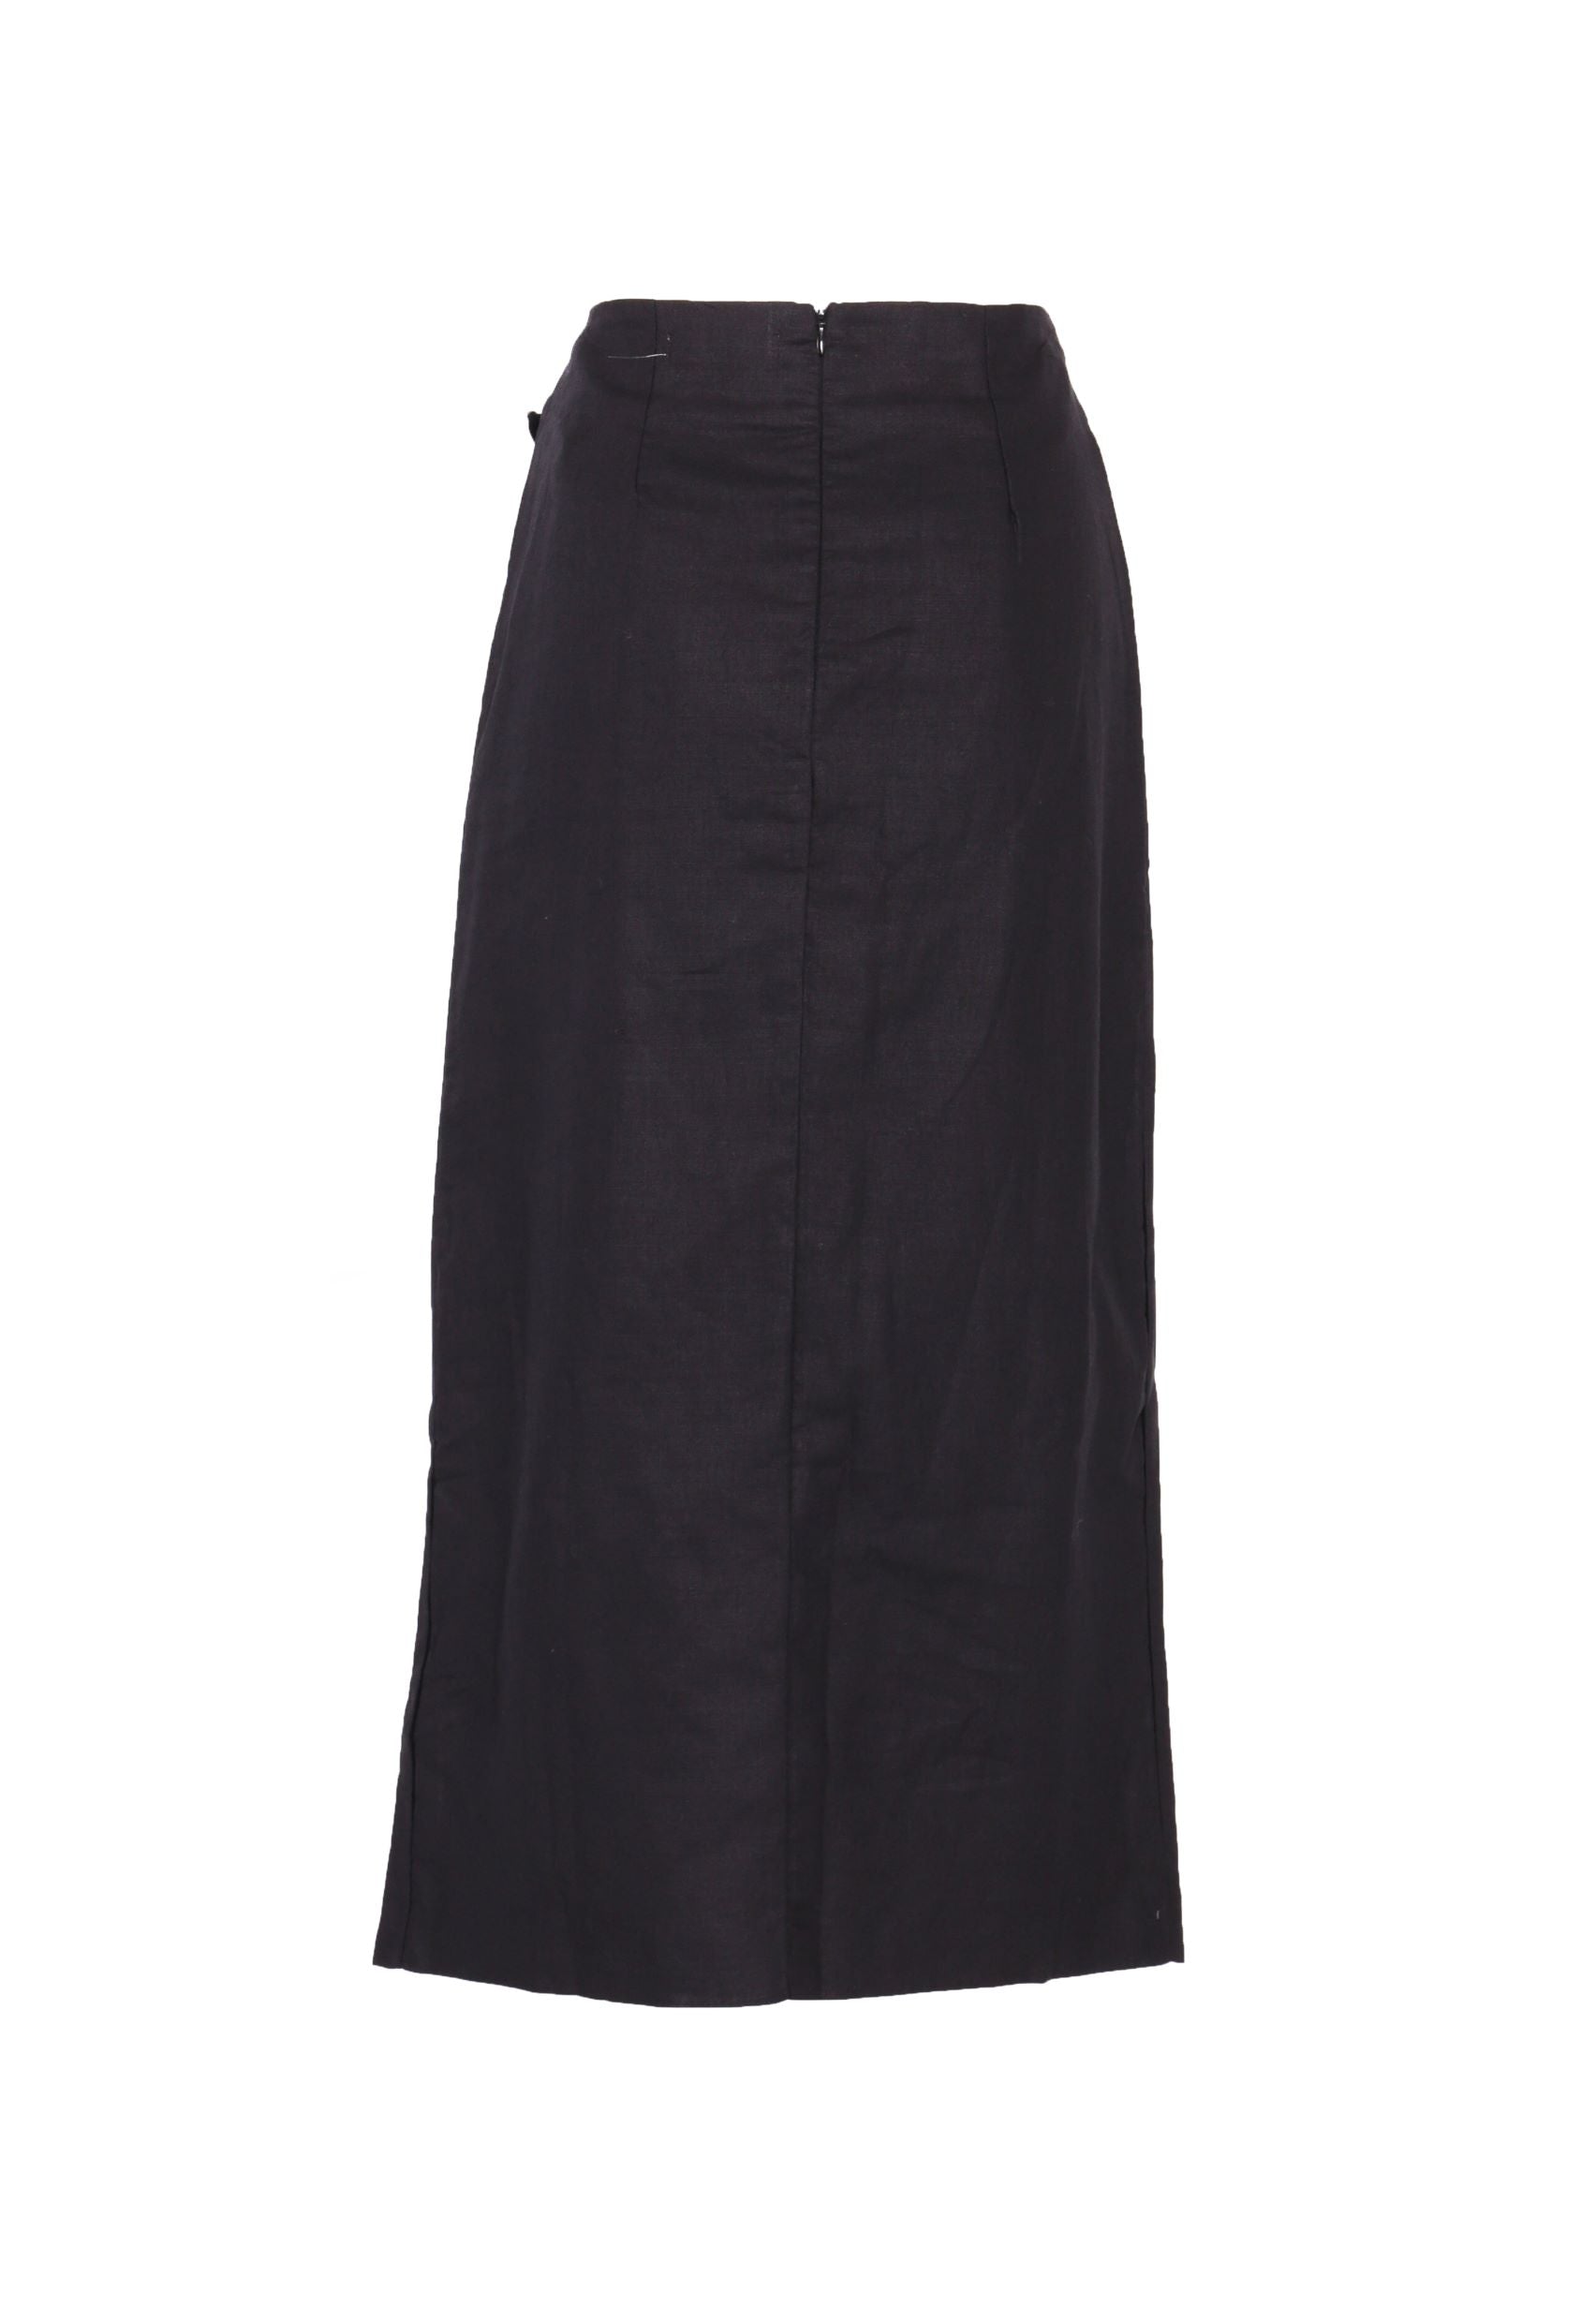 Glamorous Black Linen Look Midi Skirt with Front Side Split and Ruffle Hem